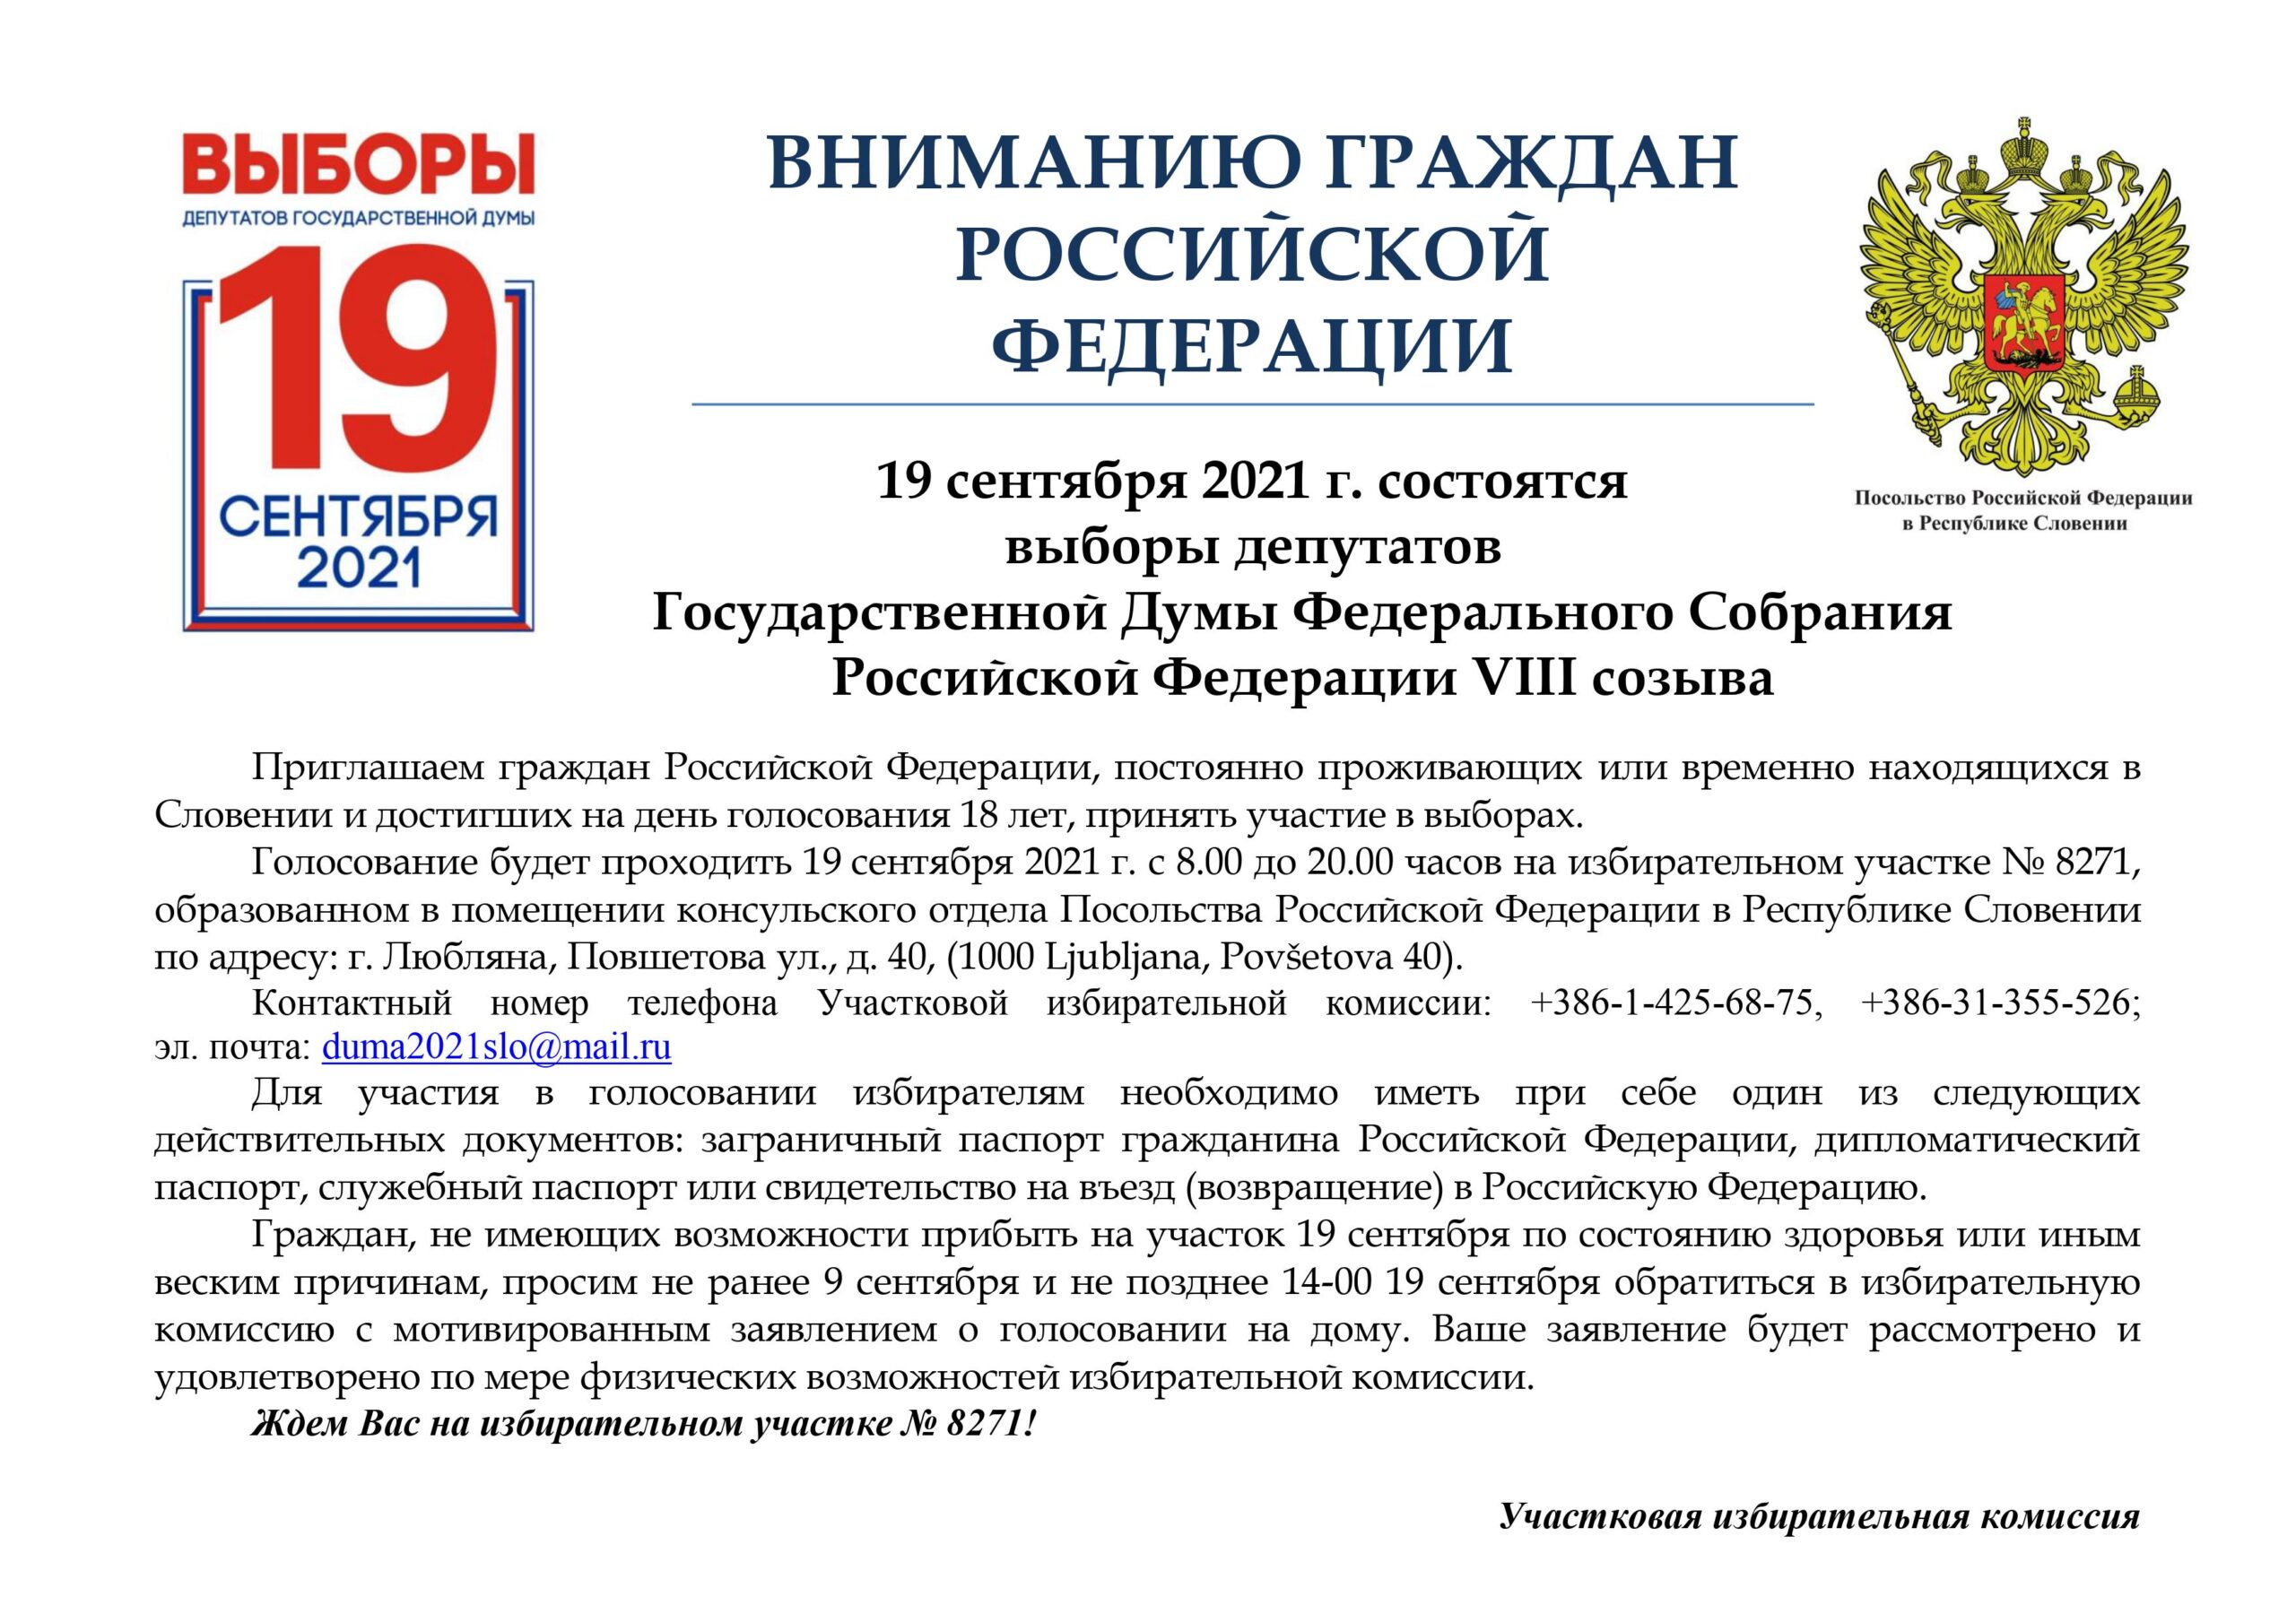 Vabilo državljanom Ruske federacije- 19. septembra 2021 bodo potekale volitve poslancev Državne dume Zveznega zbora Ruske federacije 8. sklica